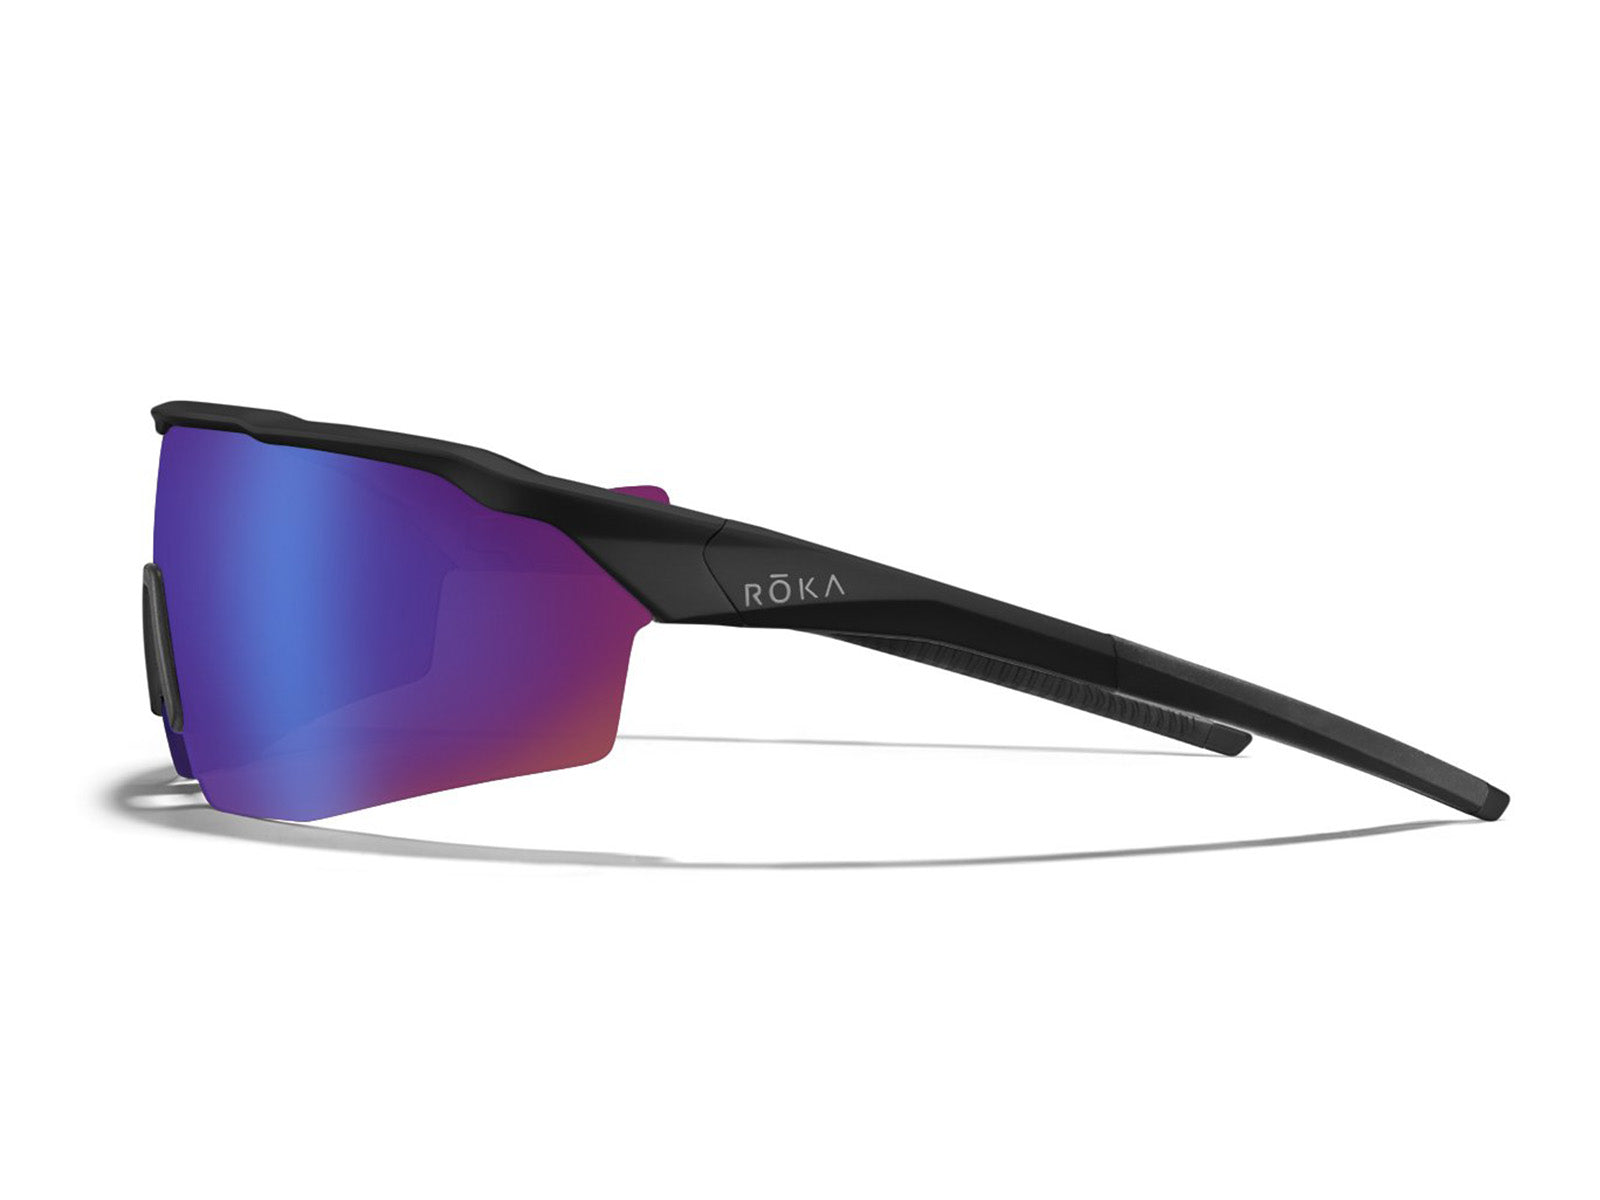 Roka SR-1x Sunglasses with Gloss Race Red Frames - Dark Carbon Lens